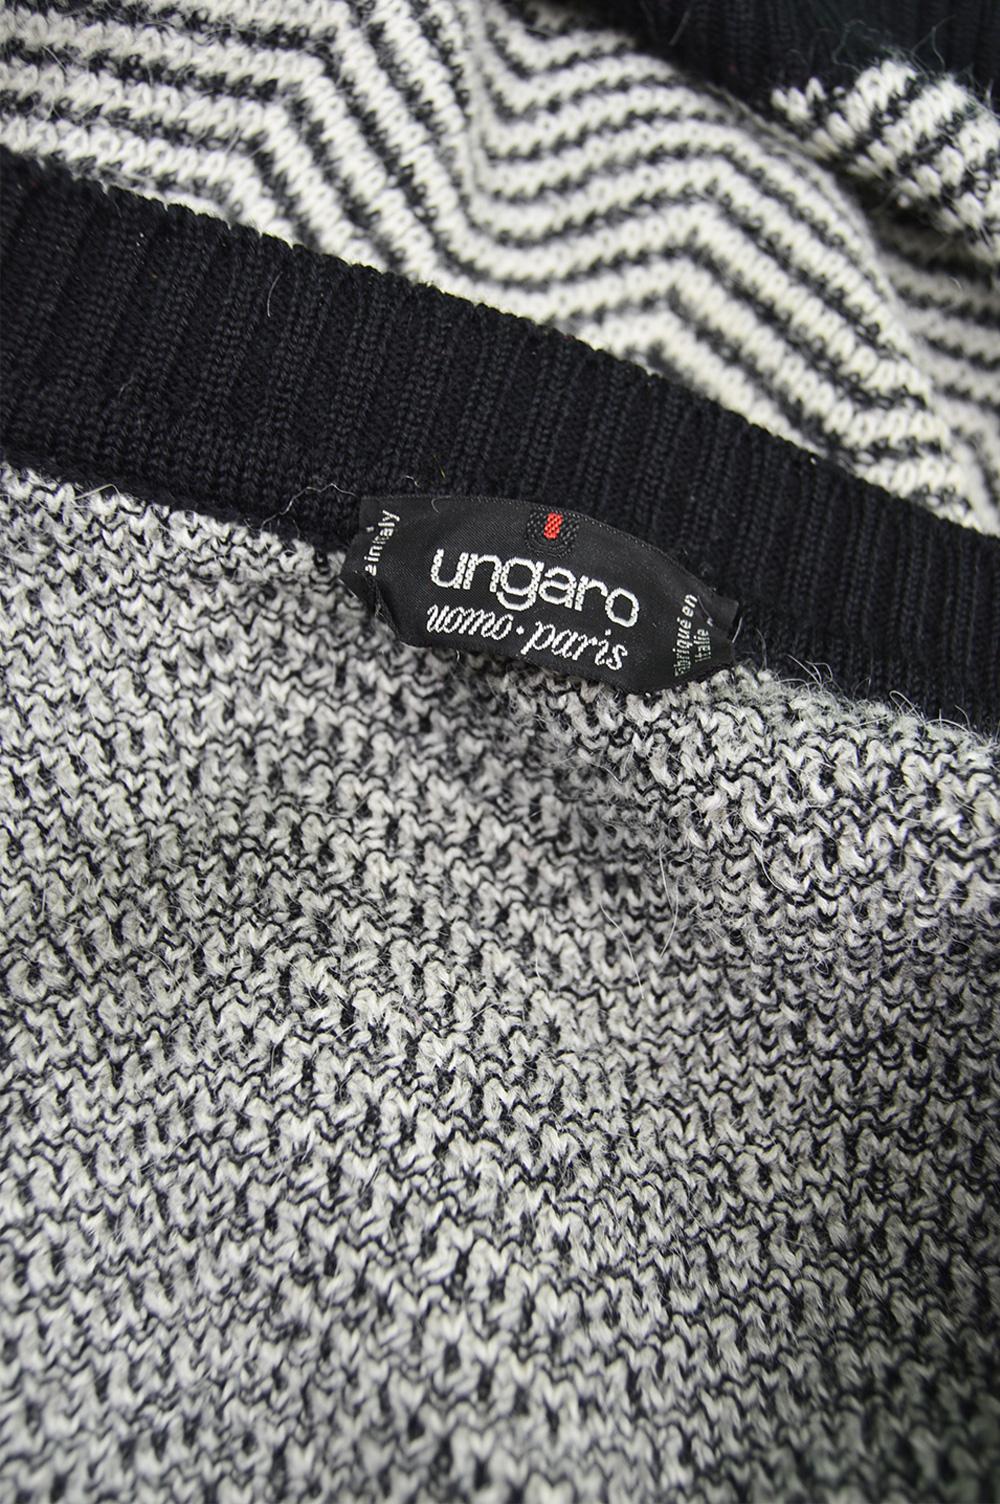 Emanuel Ungaro Men's Vintage Alpaca & Wool Blend Black & White Fuzzy Cardigan 2